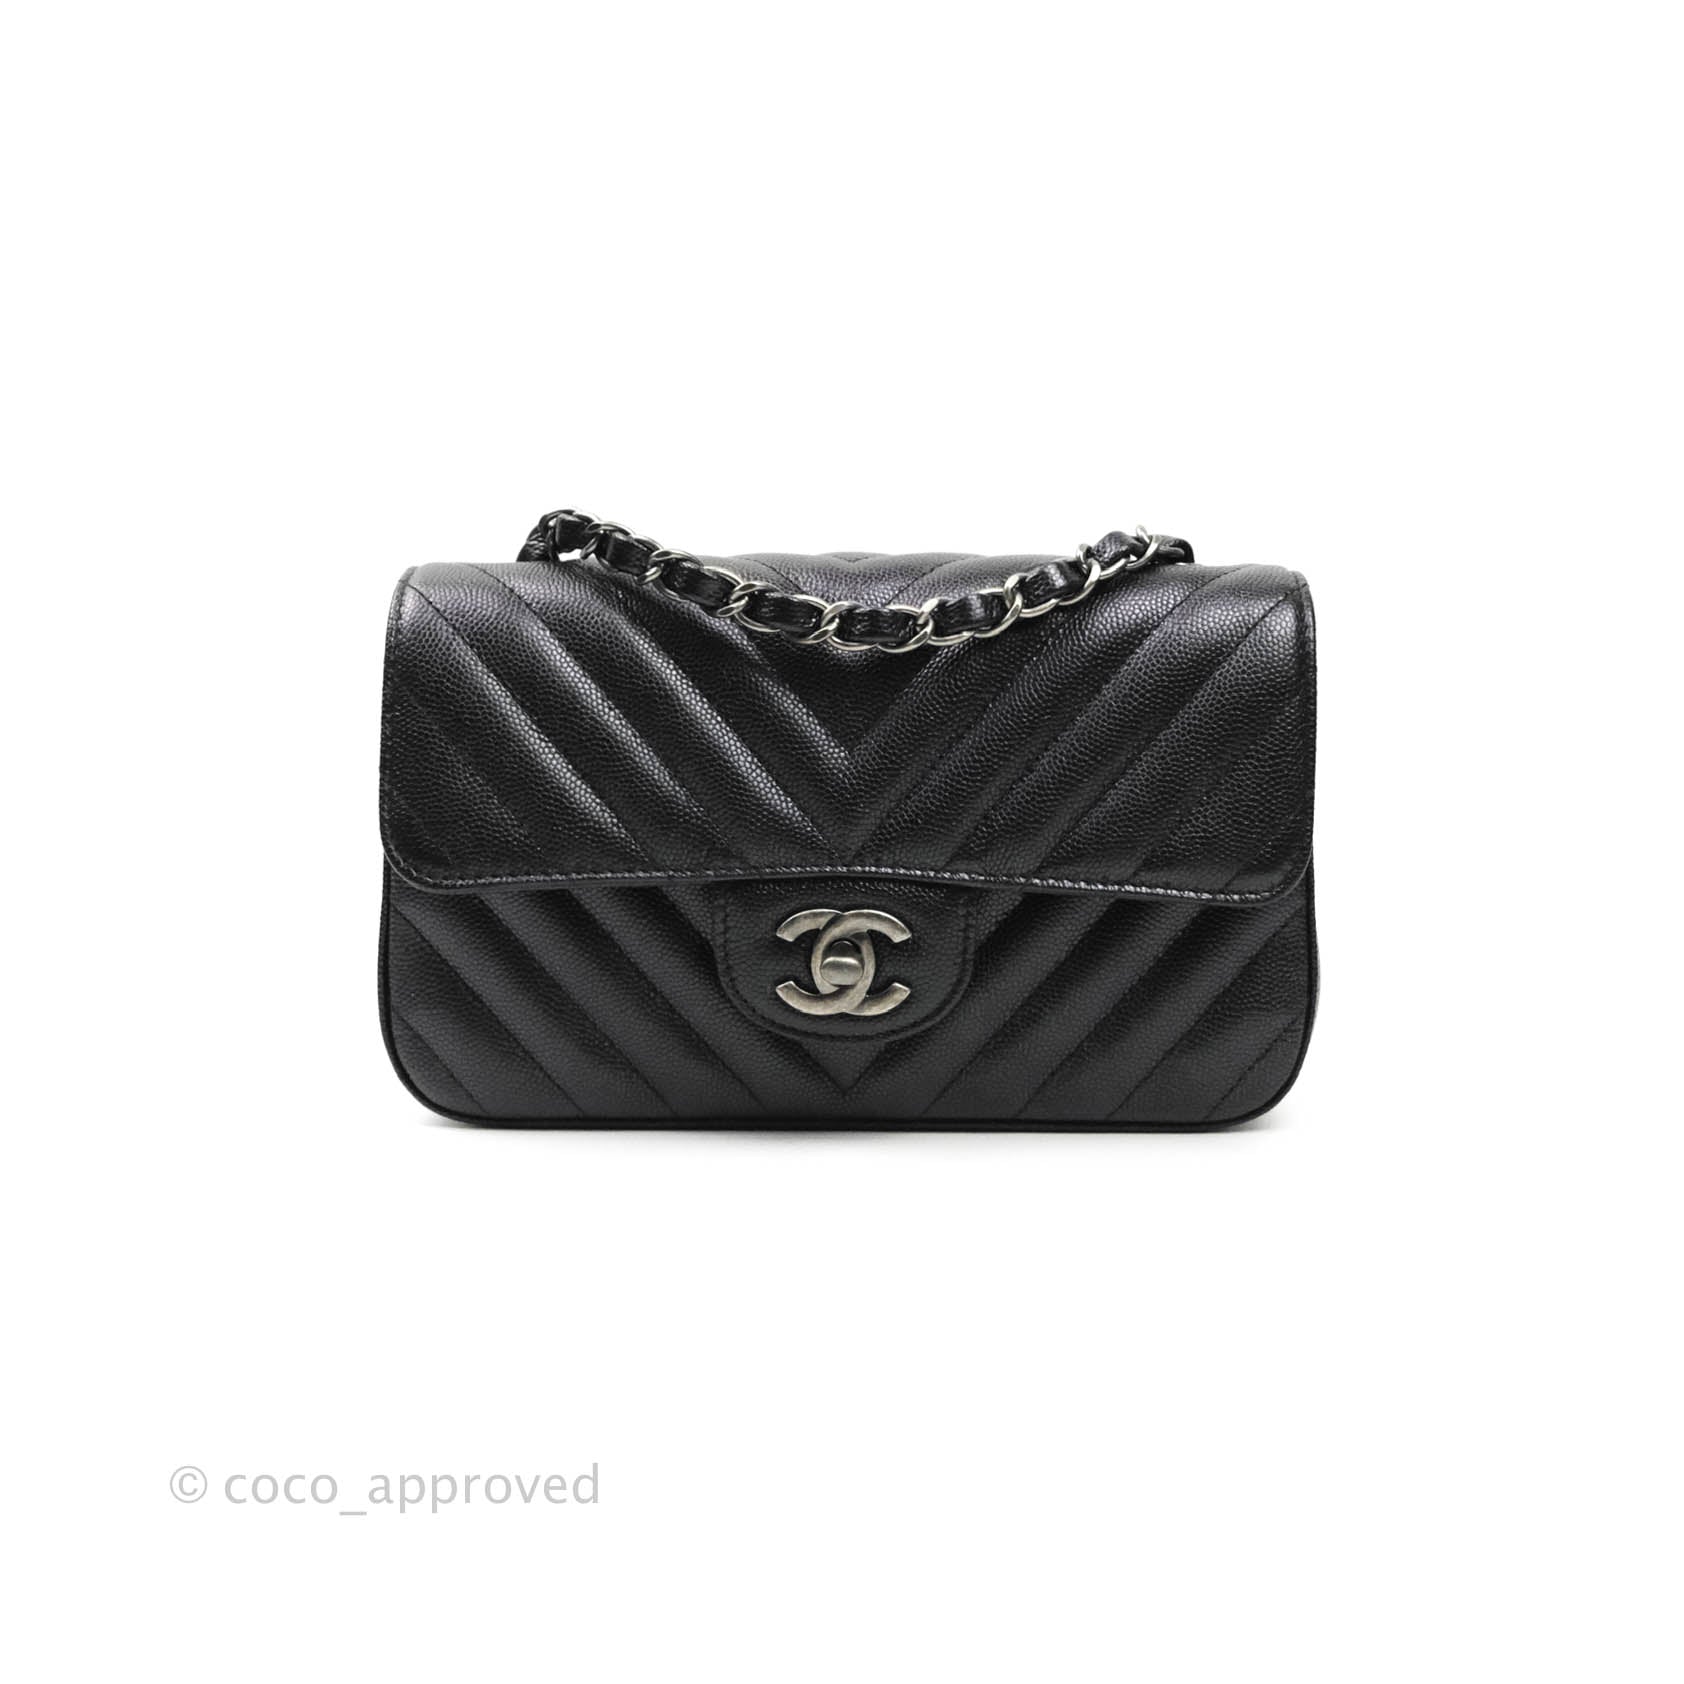 chanel small black leather purse crossbody